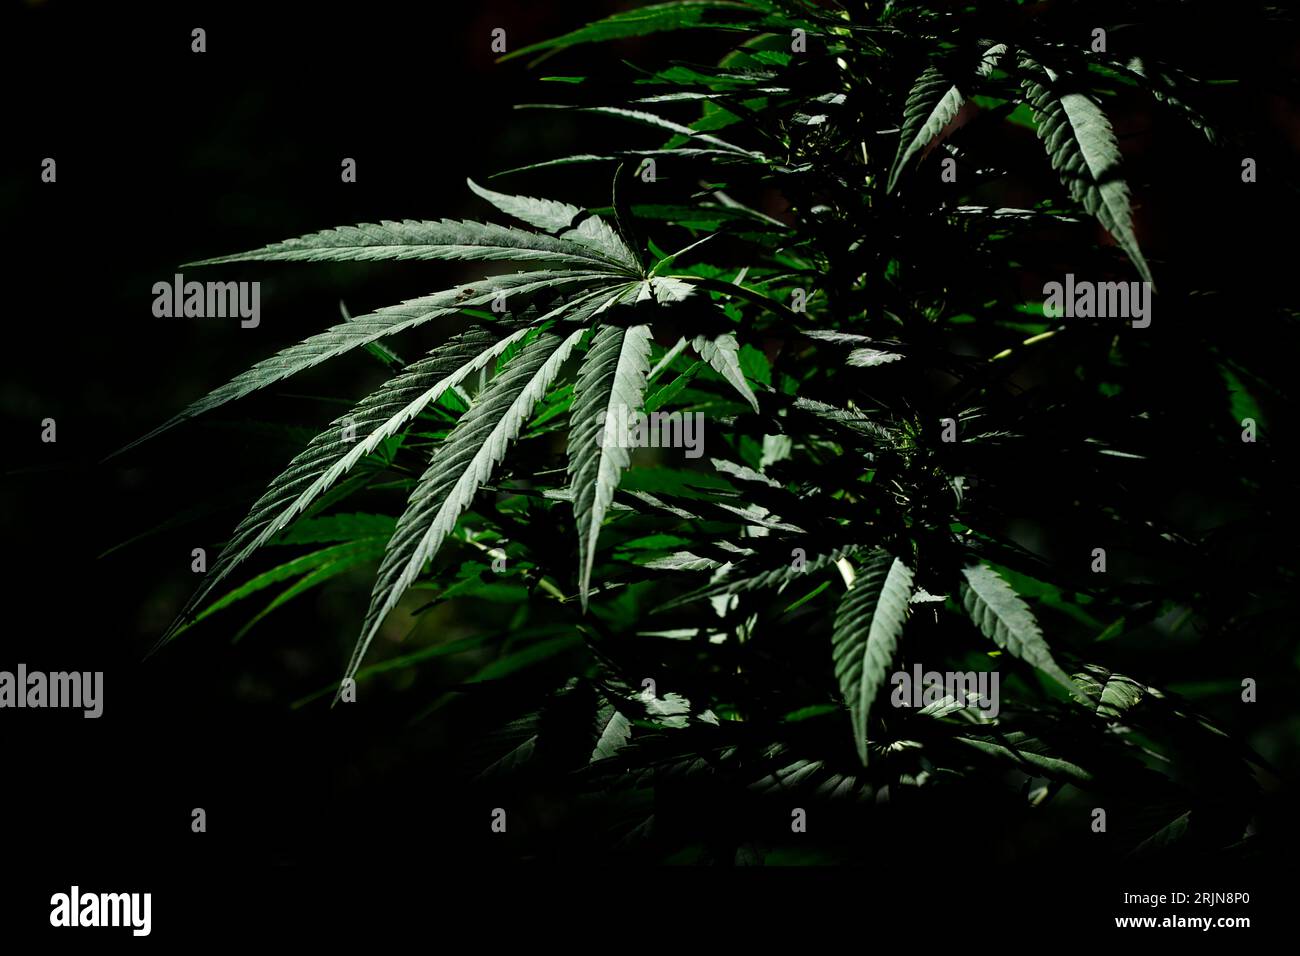 Marijuana growing illegally in Tarragona, Spain. Stock Photo